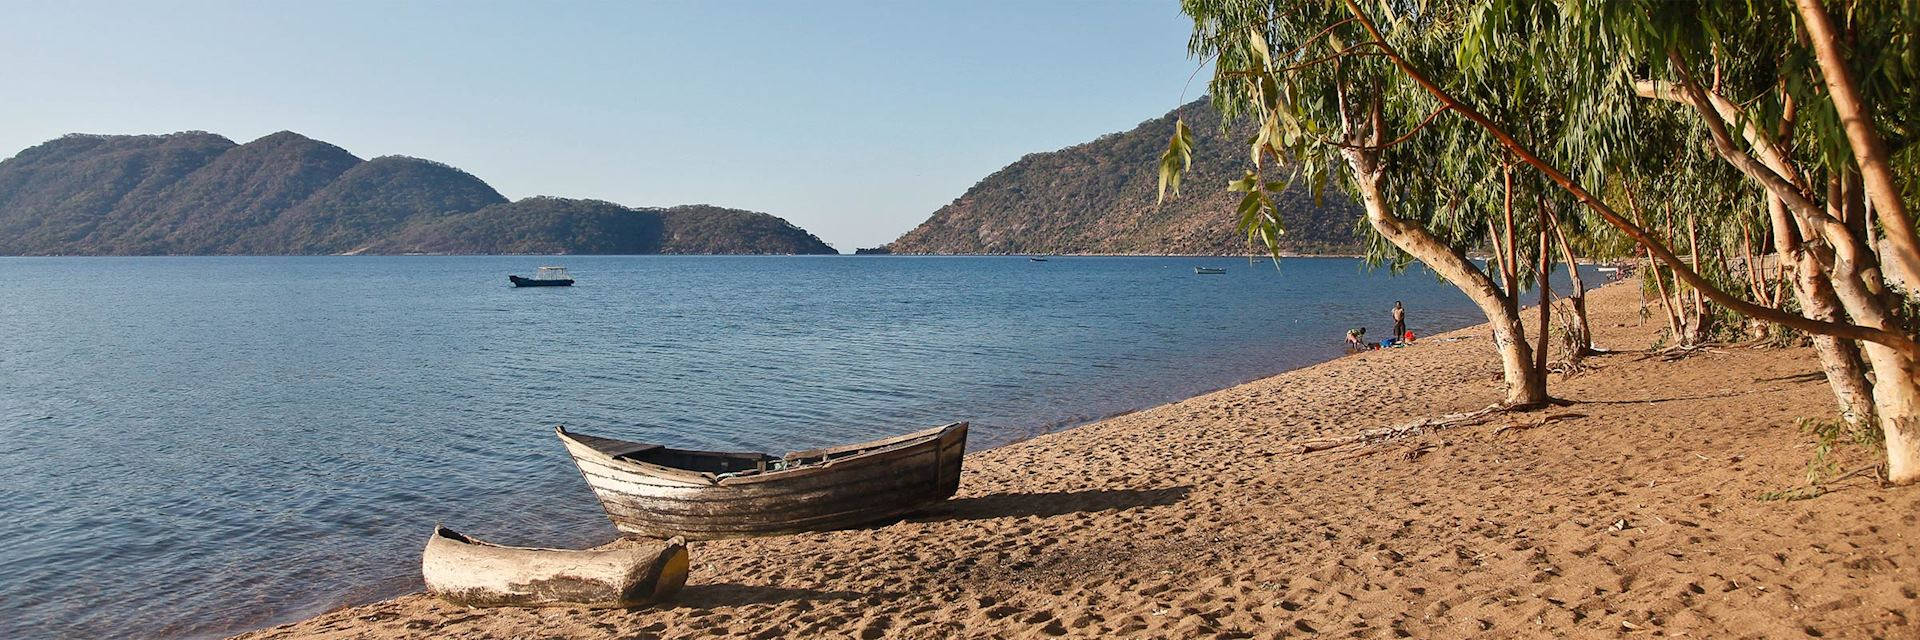 Malawi Small Boats On Beach Wallpaper